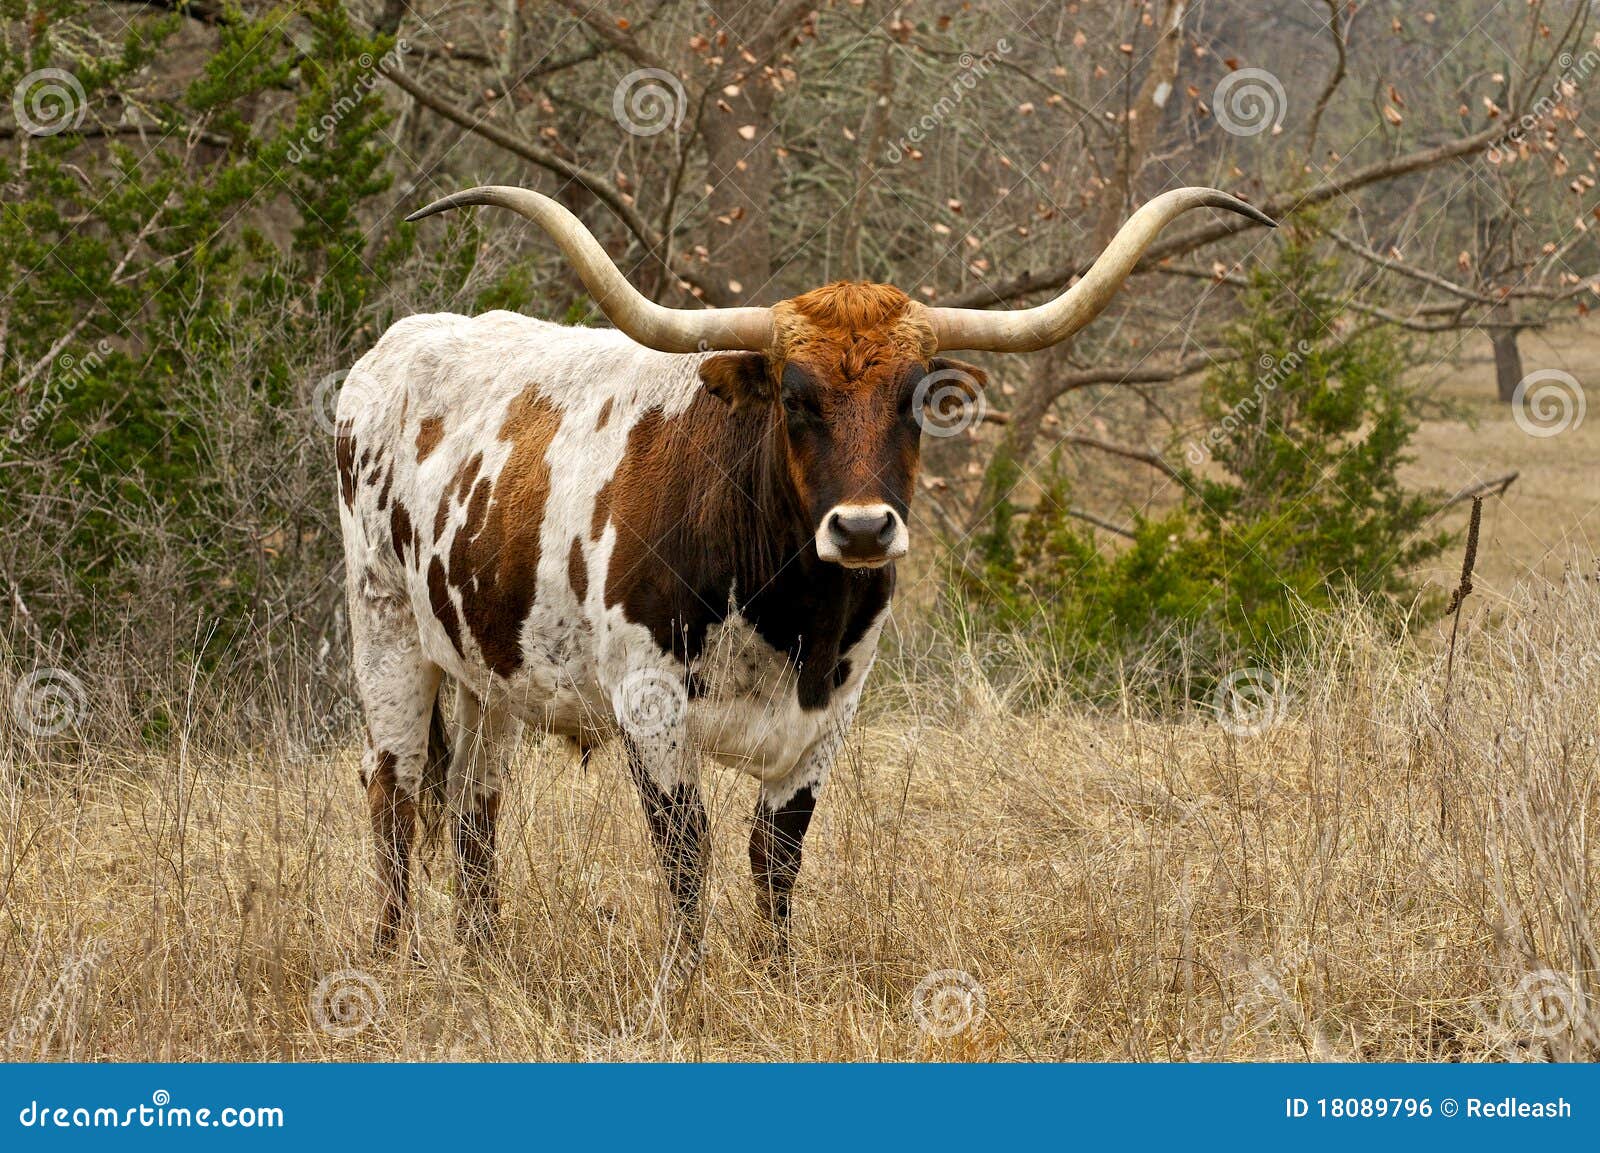 brown and white texas longhorn steer